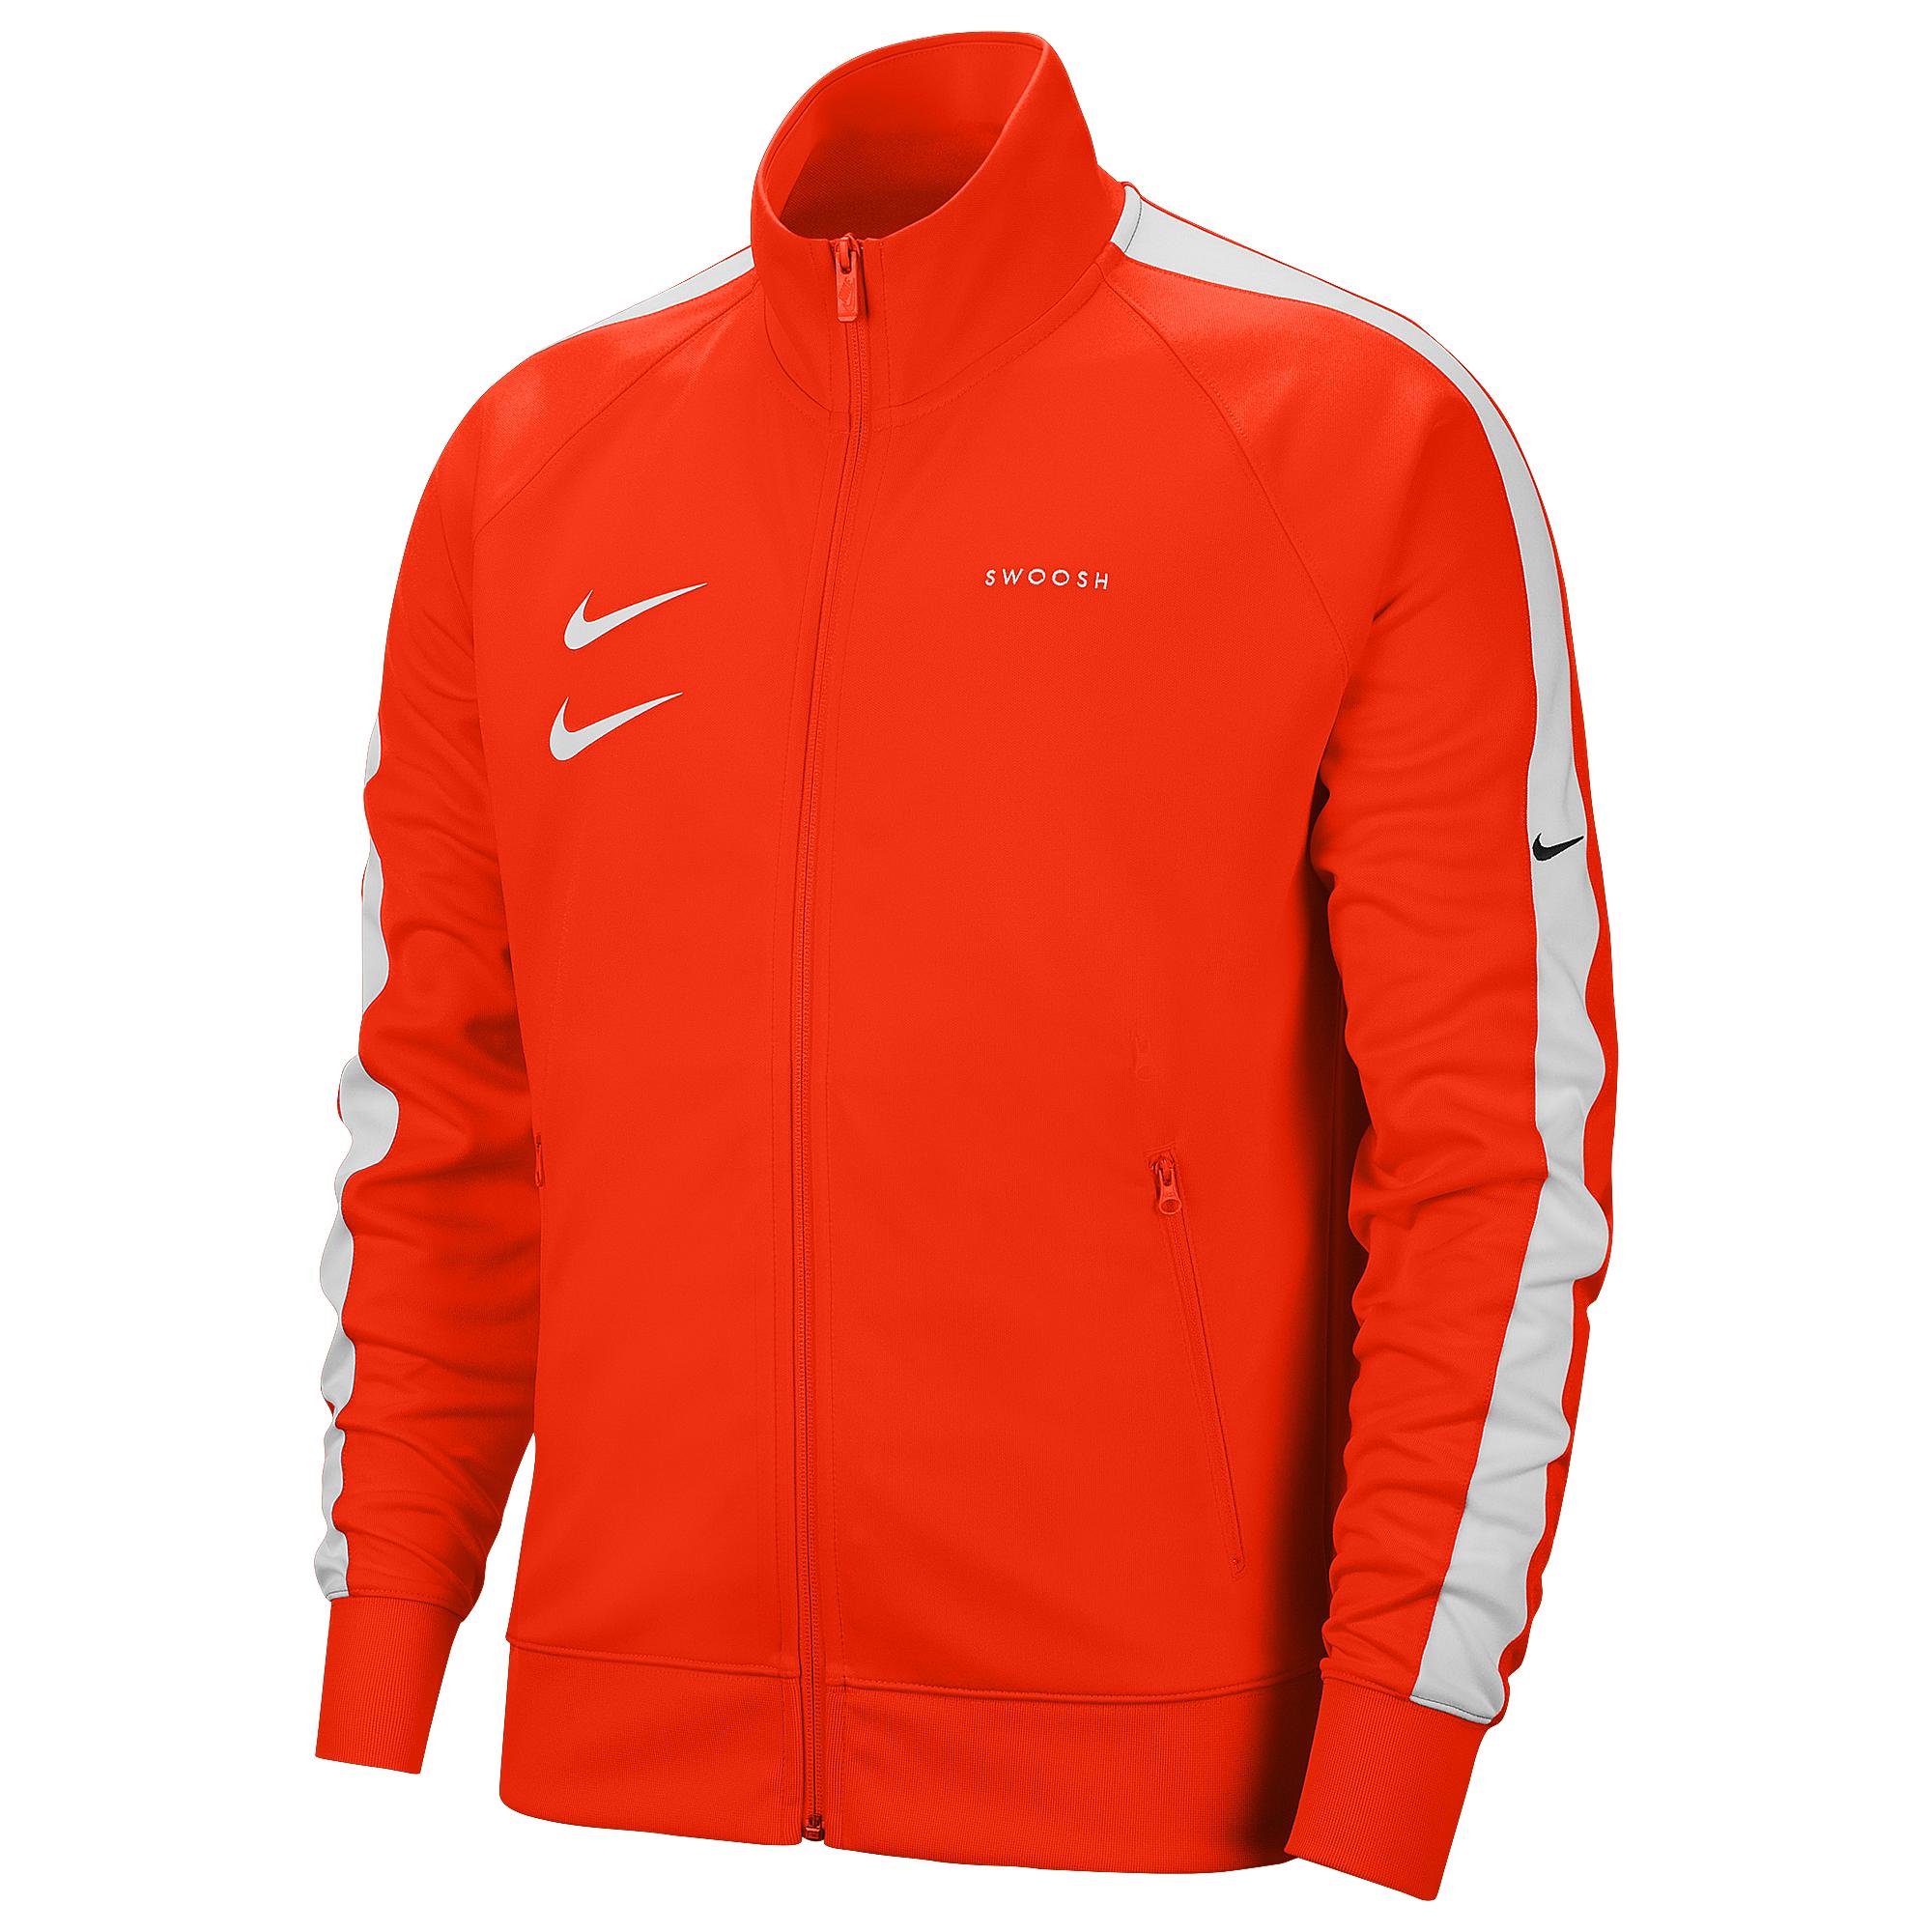 Nike Synthetic Swoosh Poly Knit Jacket in Orange for Men - Lyst